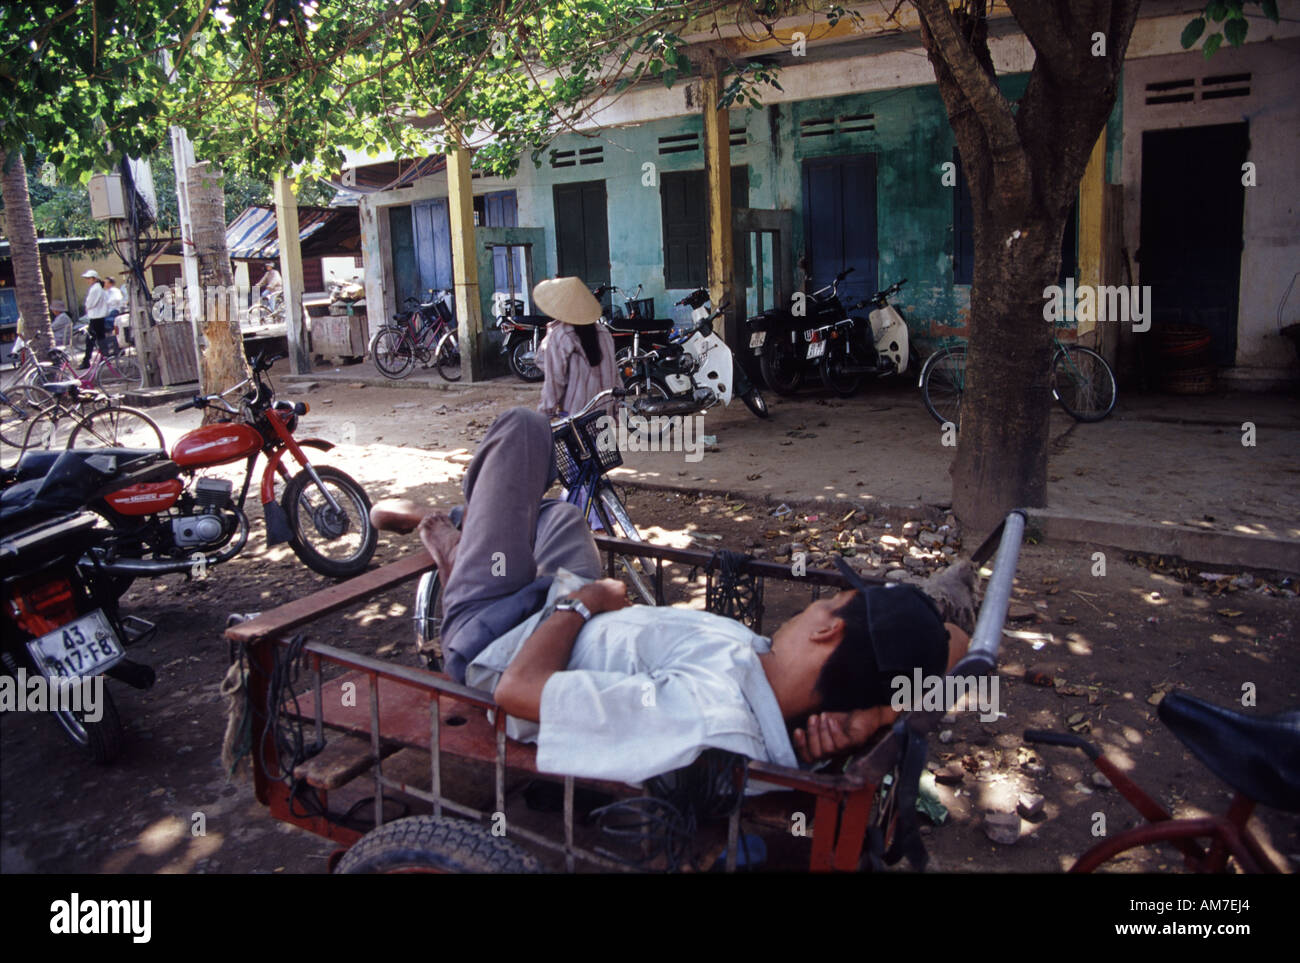 Man sleeping on bike trolley under a shady tree in Hoi An Vietnam Stock Photo